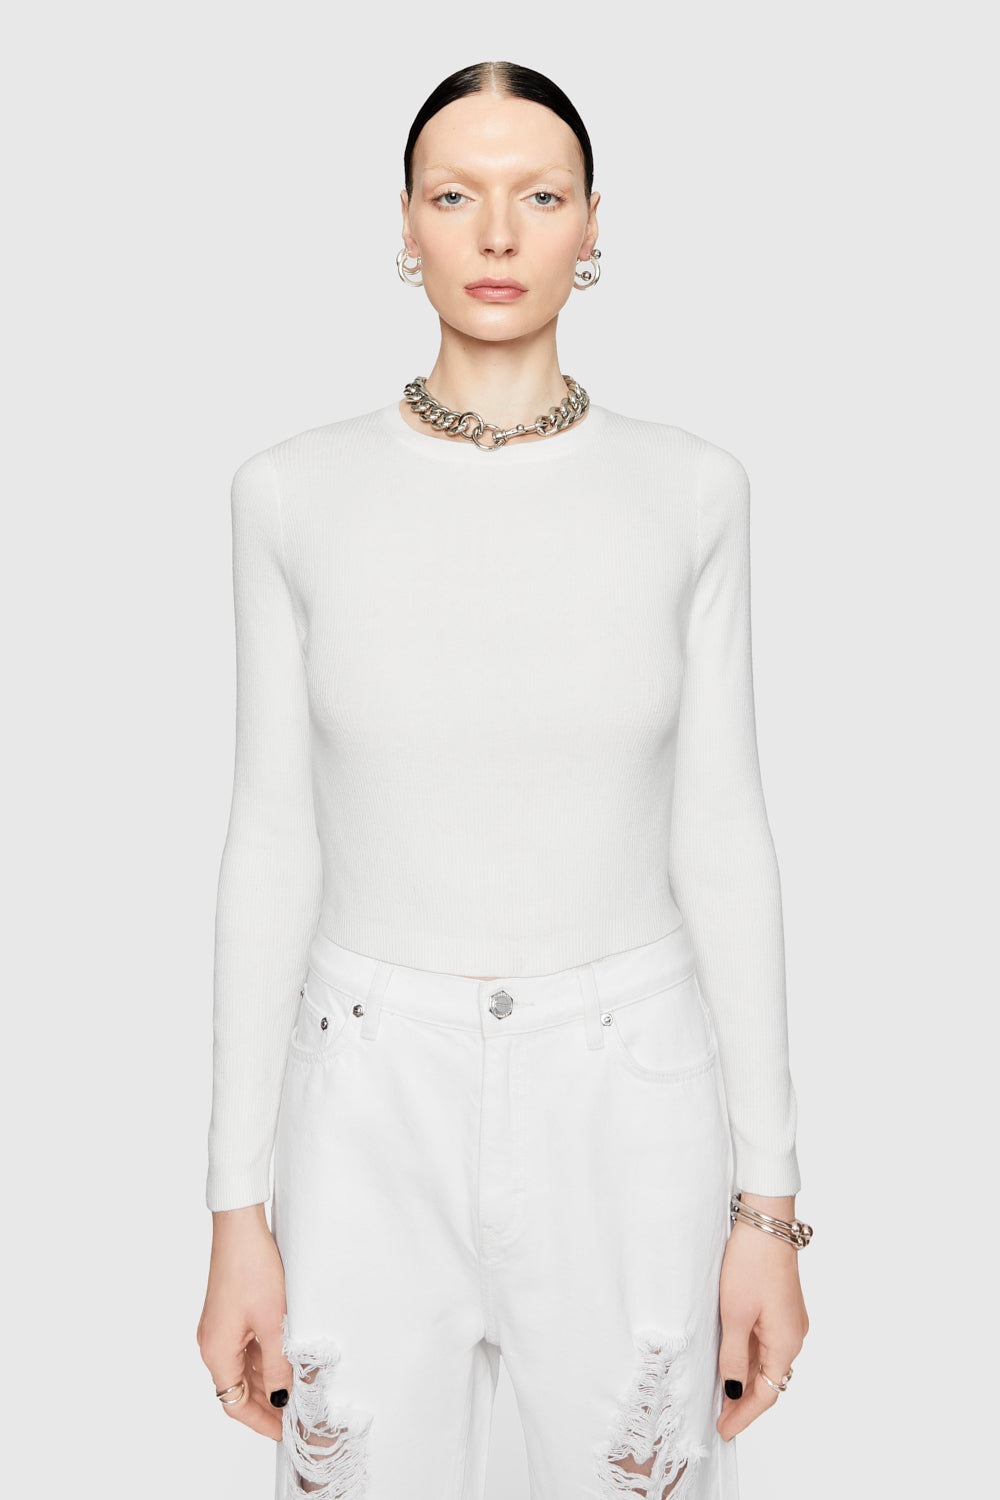 Louis Vuitton White Printed Cotton Blend Long Sleeve Shirt S